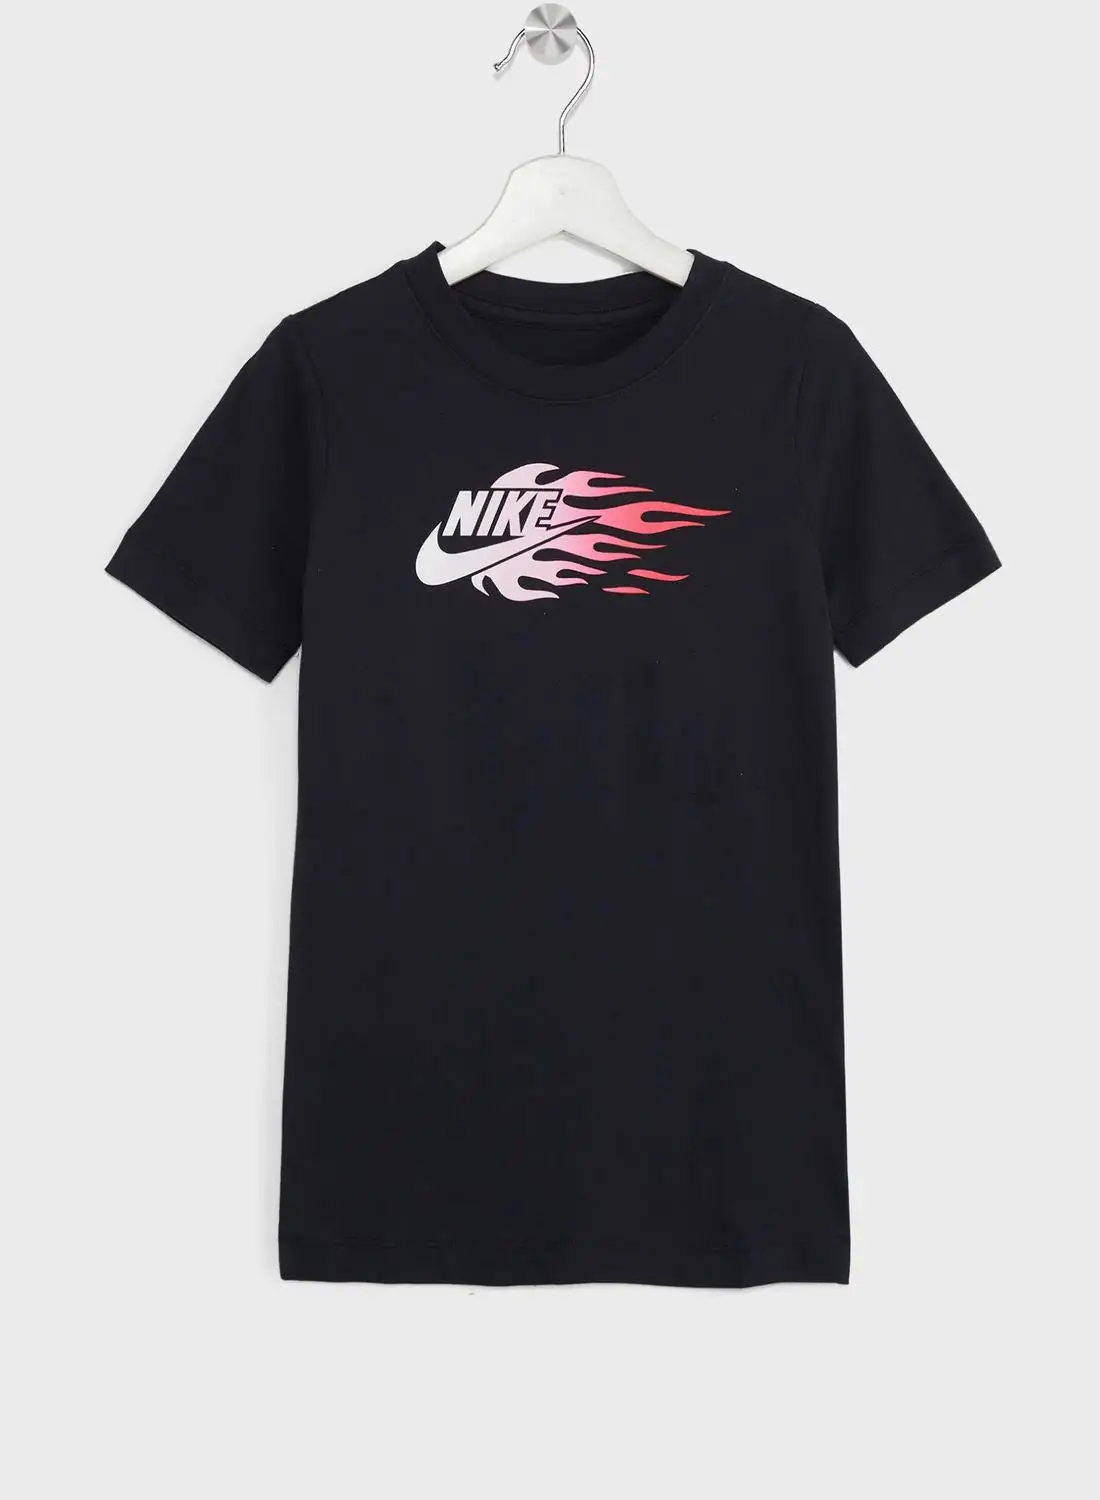 Nike Kids Brandmark T-Shirt